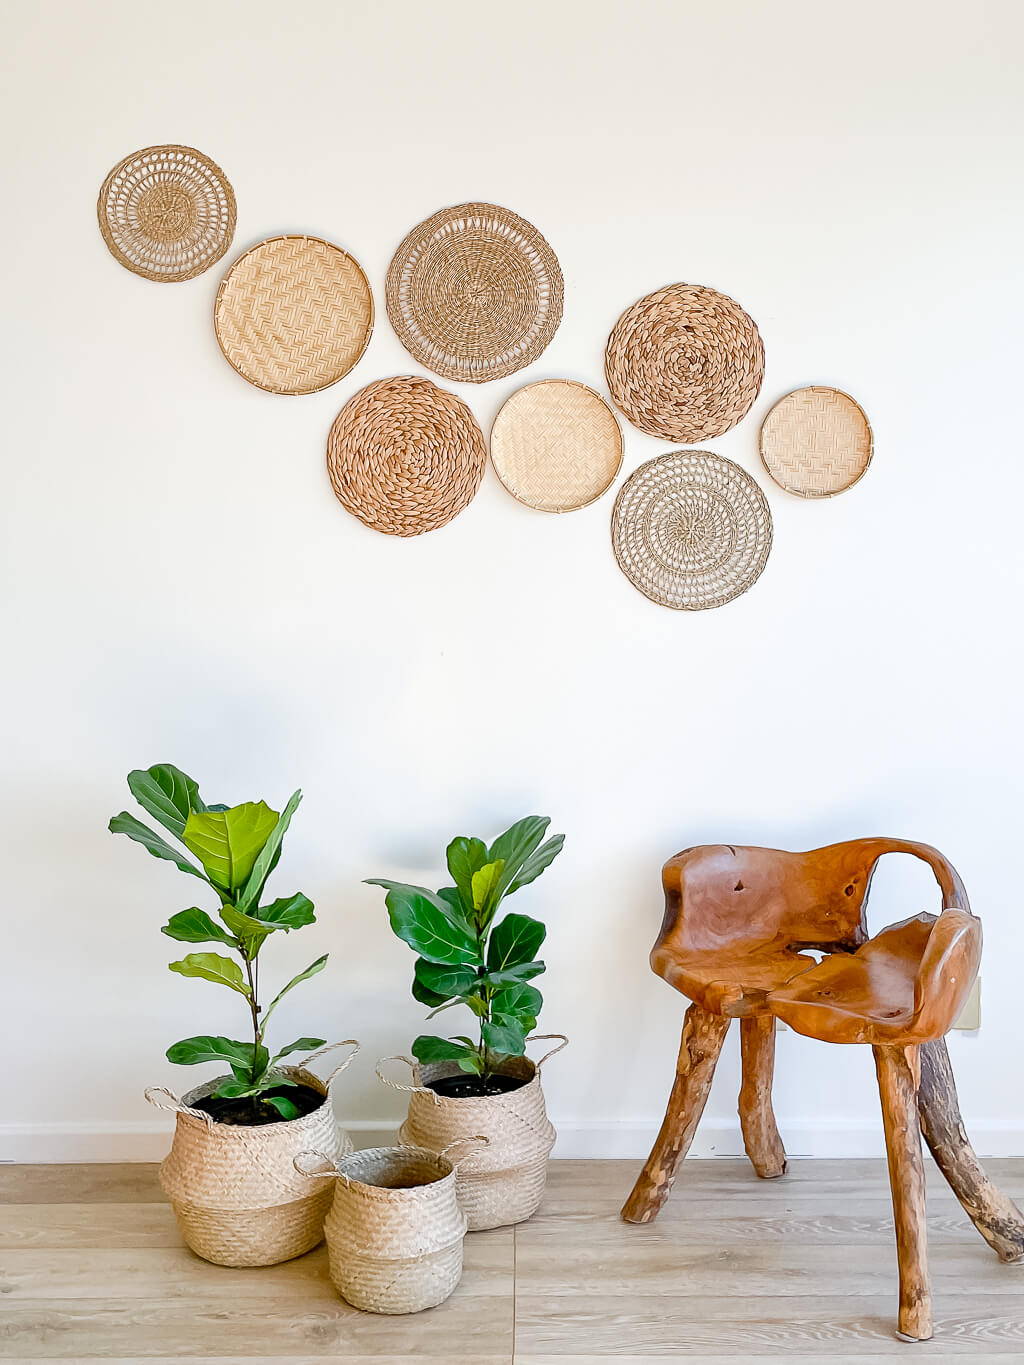 Hycroft Home Decor - Boho Curated Wall Baskets Decor